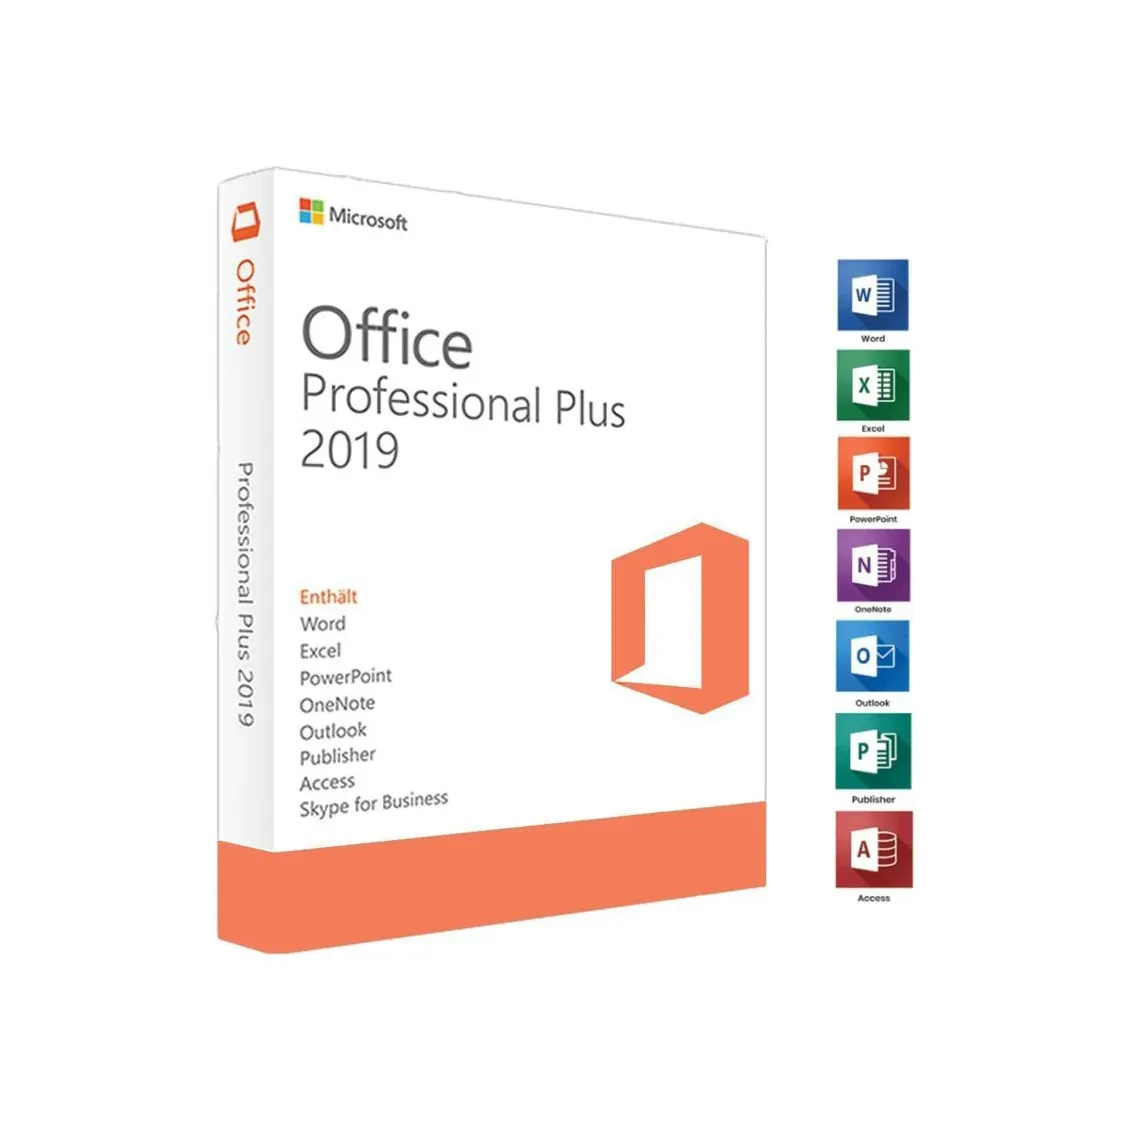 MS Office 2019 Pro Plus ProductKey lebenslange Gültigkeit für 1 PC